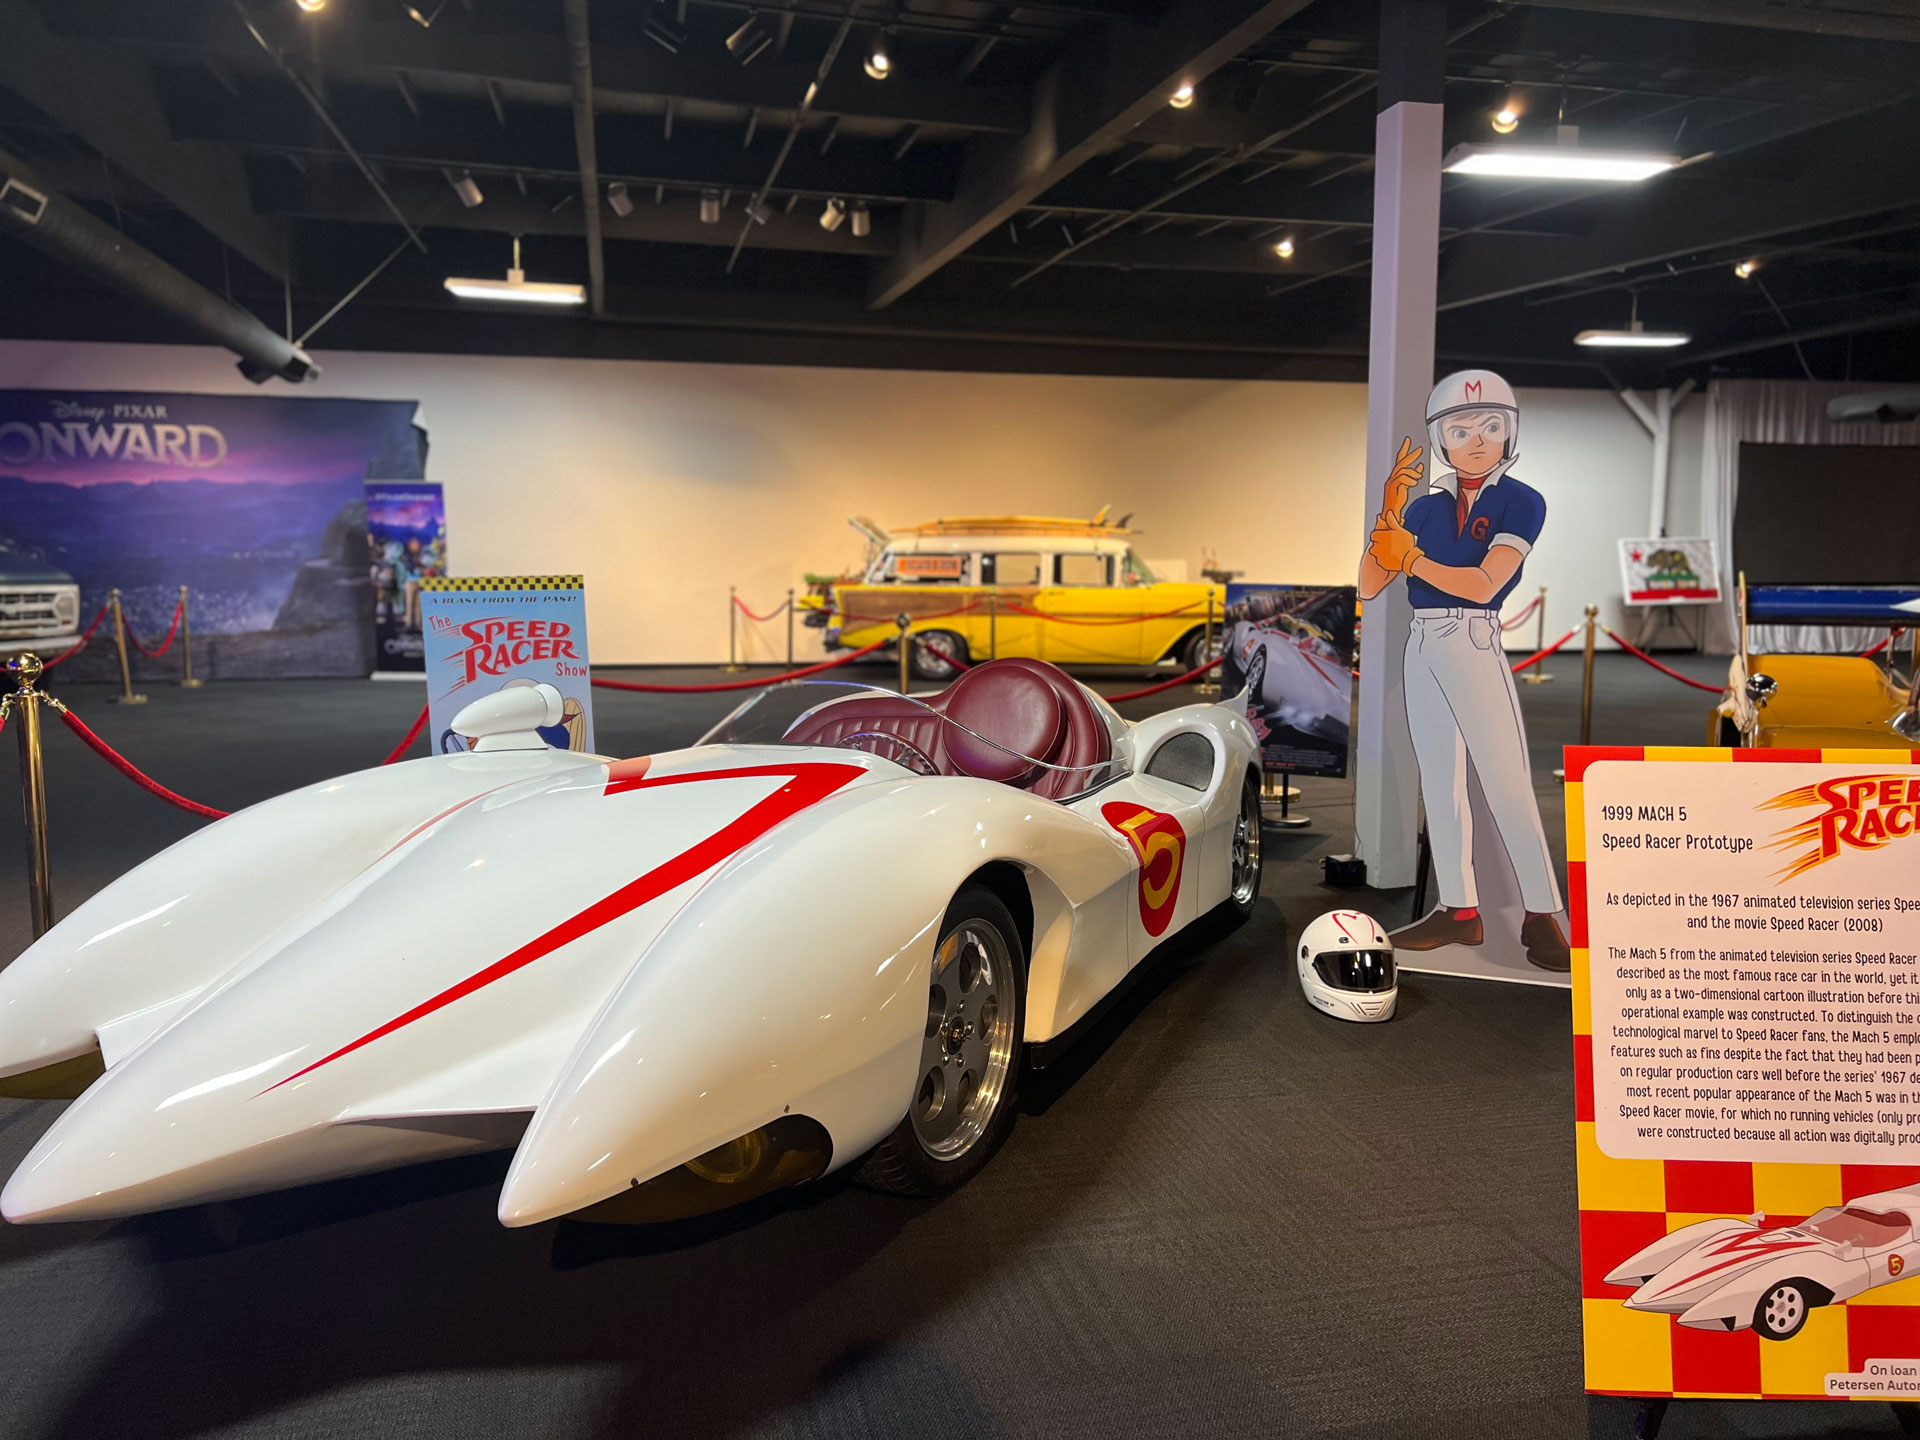 photo of the mach 5 speed racer exhibit